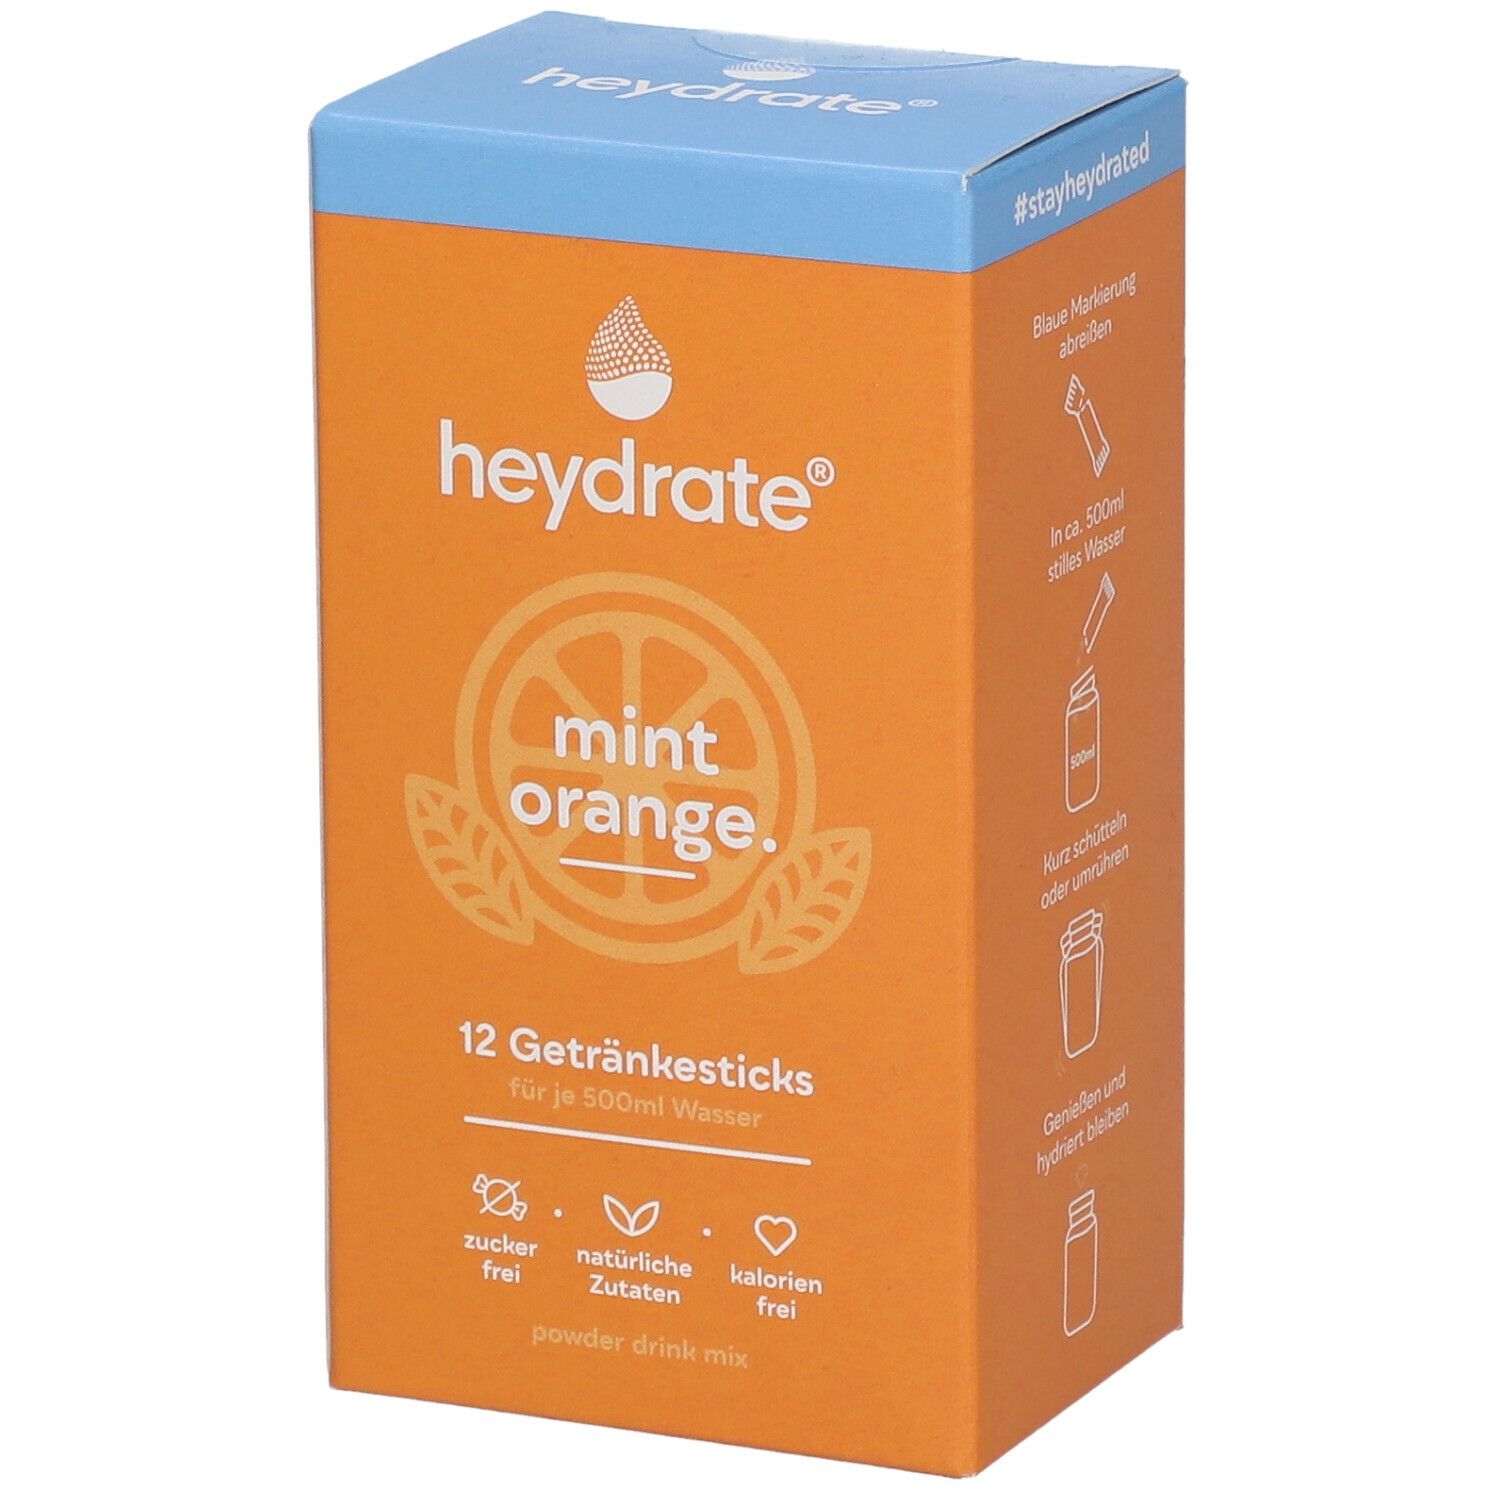 Image of heydrate® mint orange